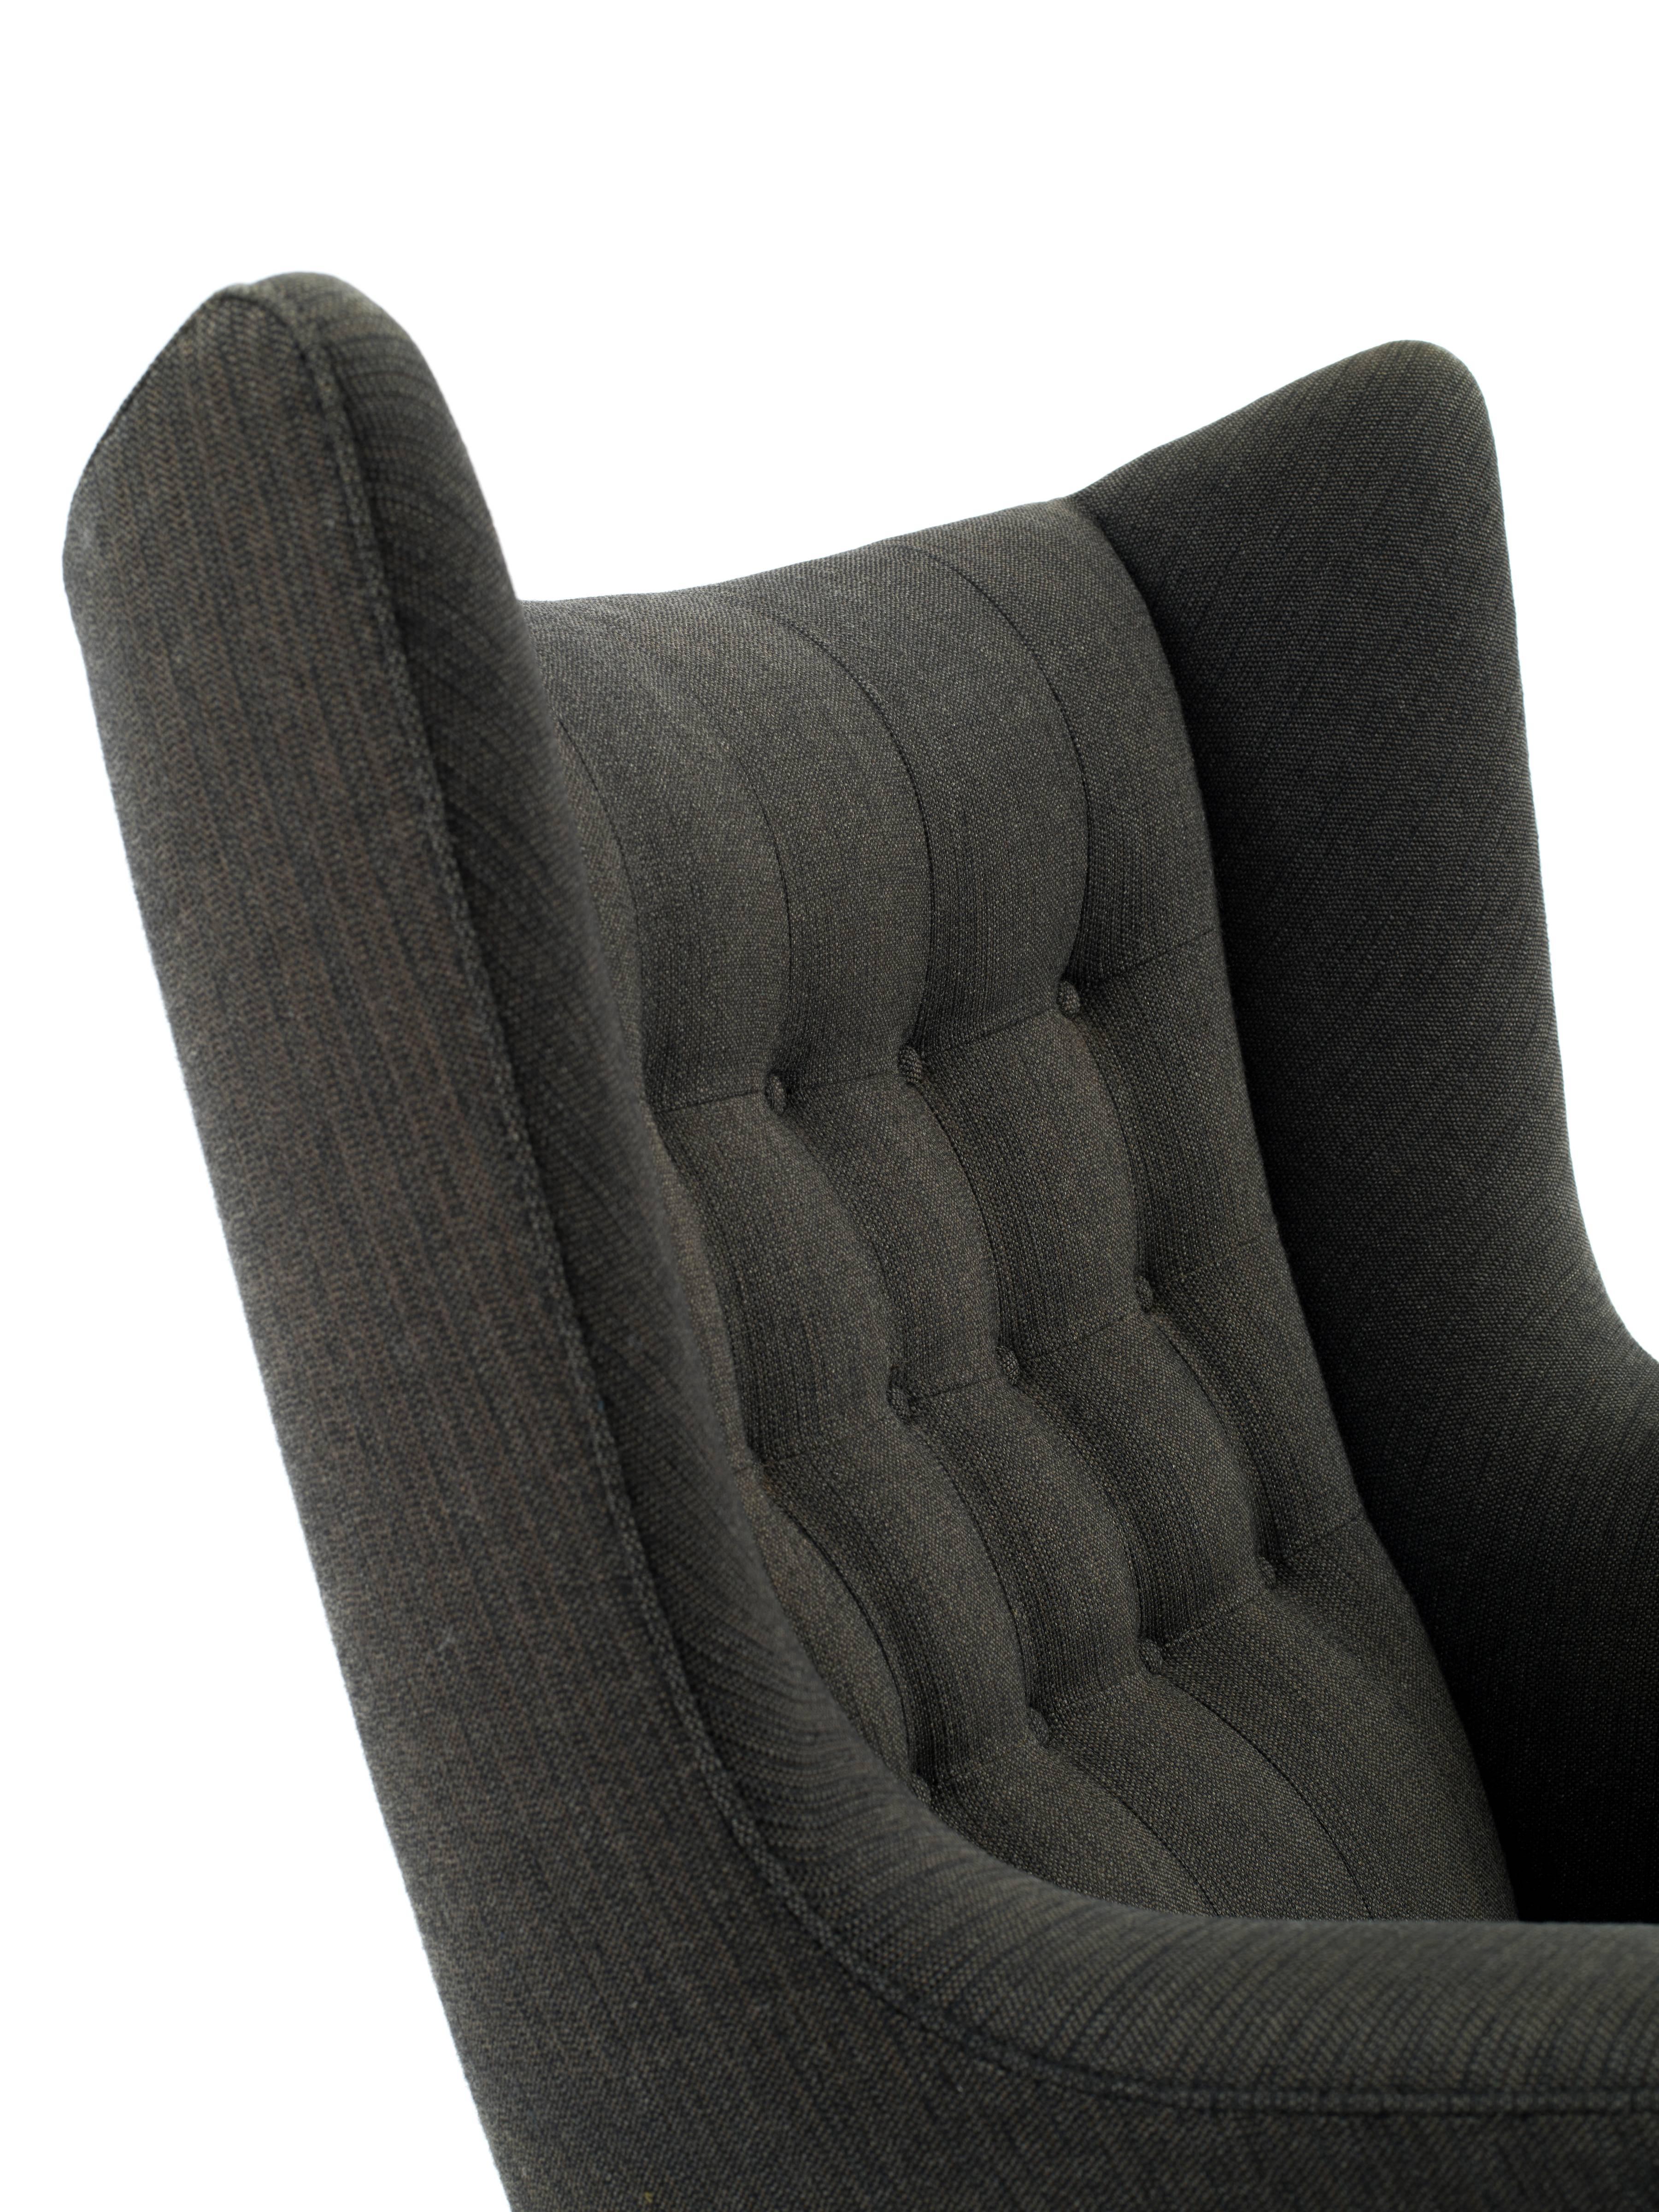 Danish Hans J Wegner Papa Bear Chair in Original Charcoal Gray Wool Upholstery